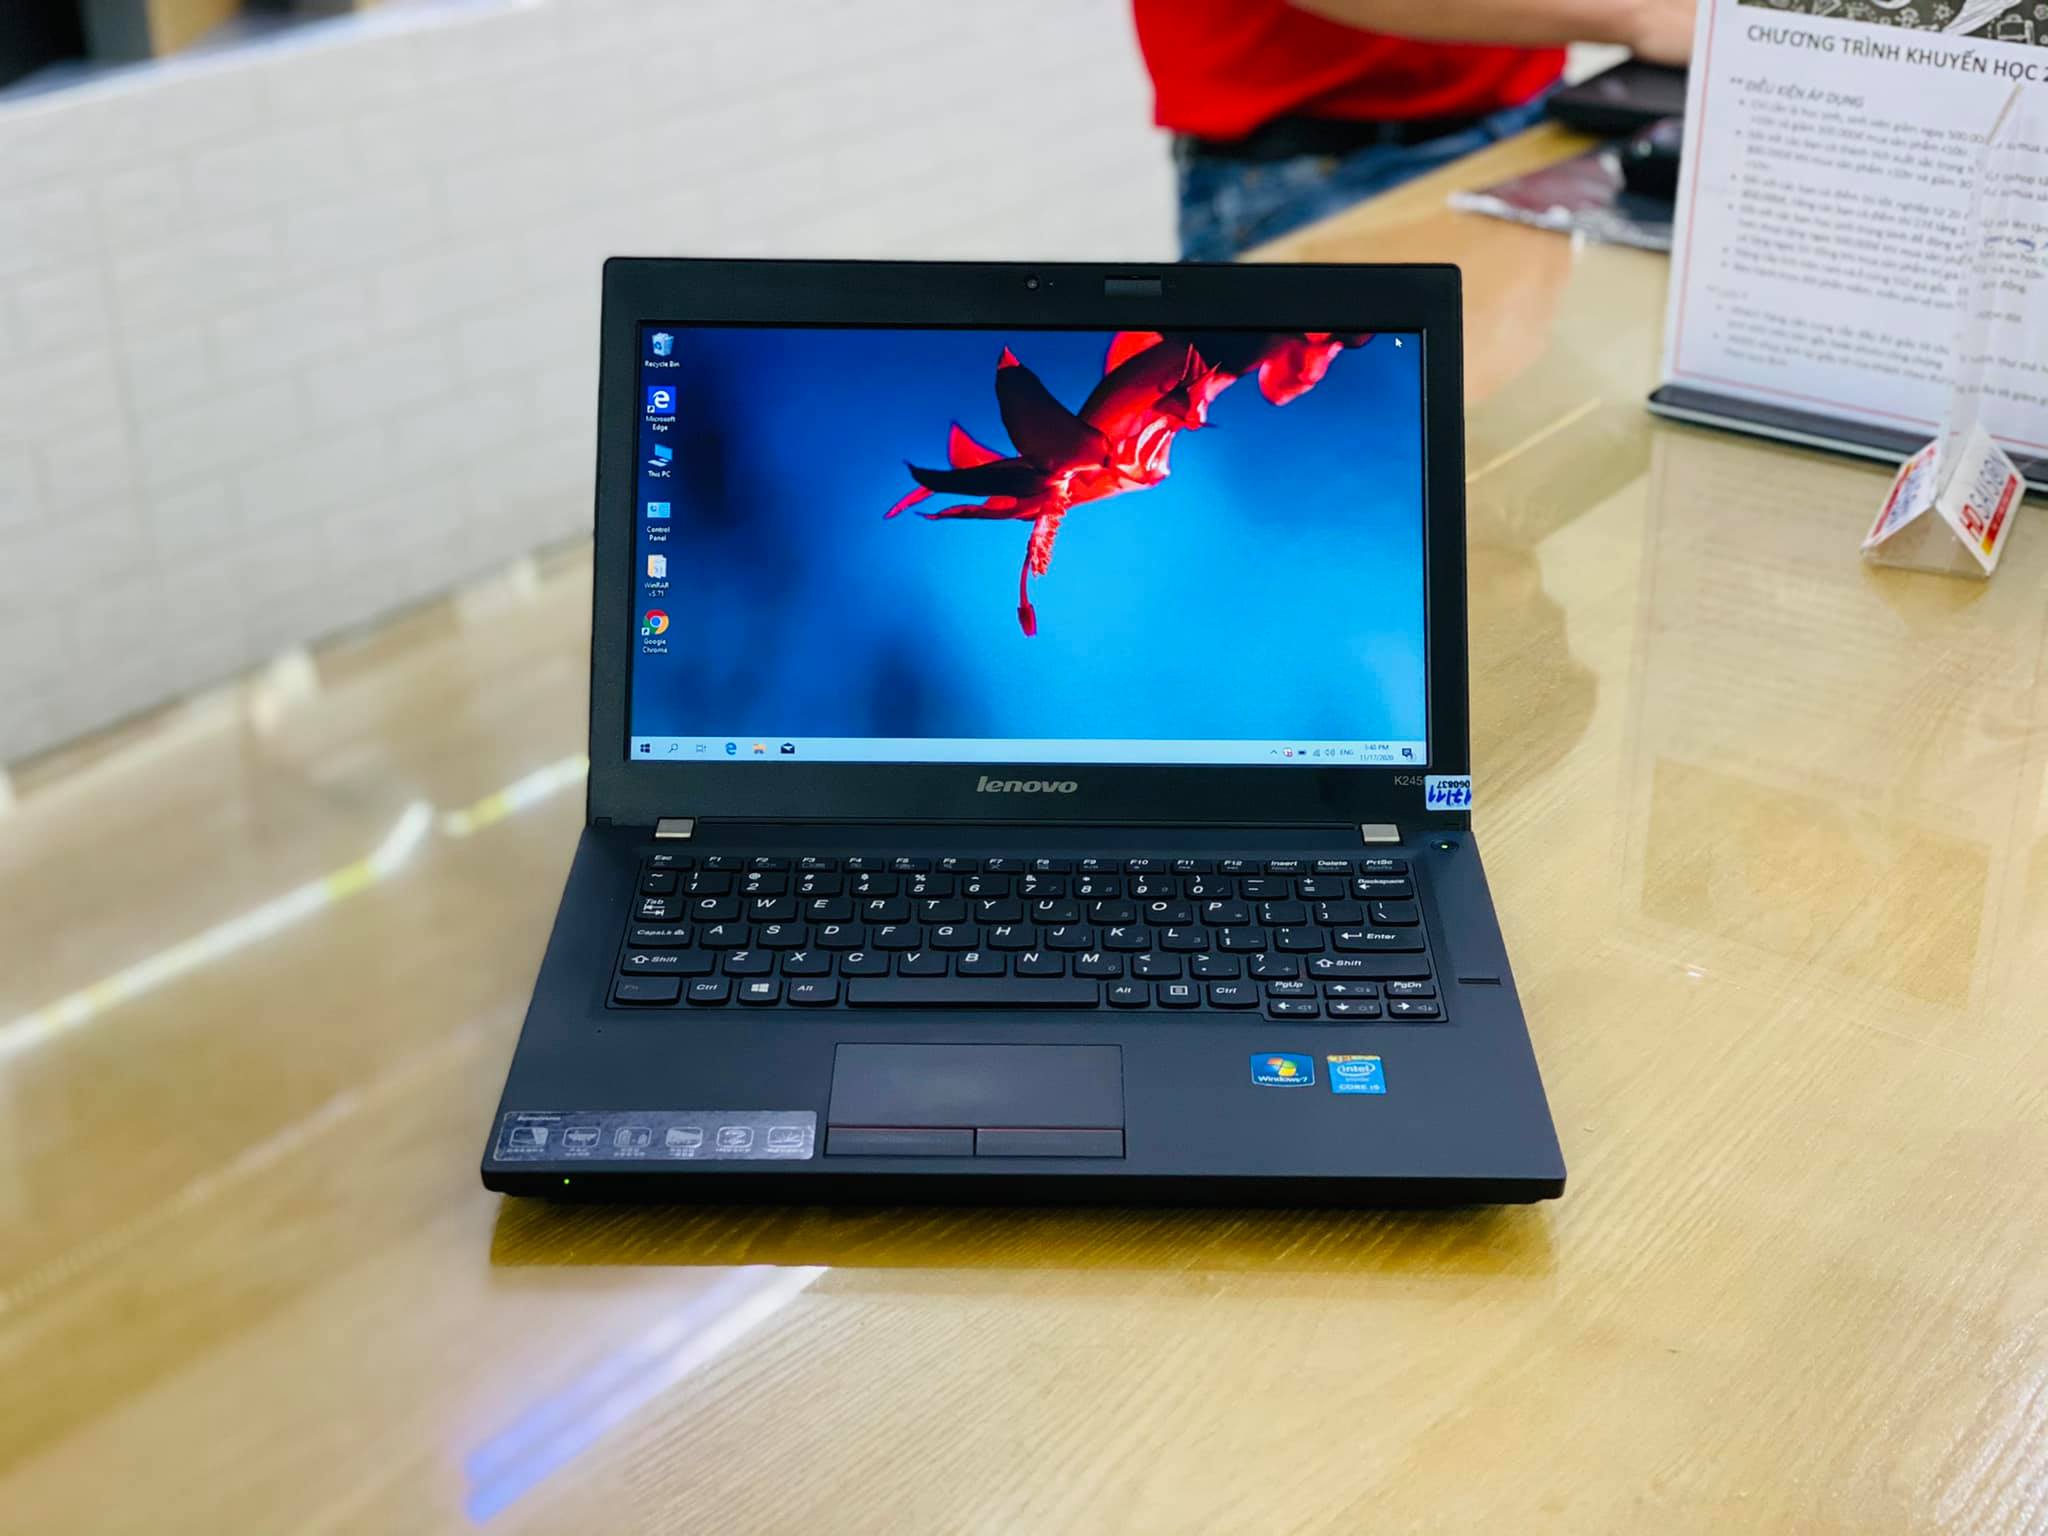 Laptop Lenovo K2450.jpg